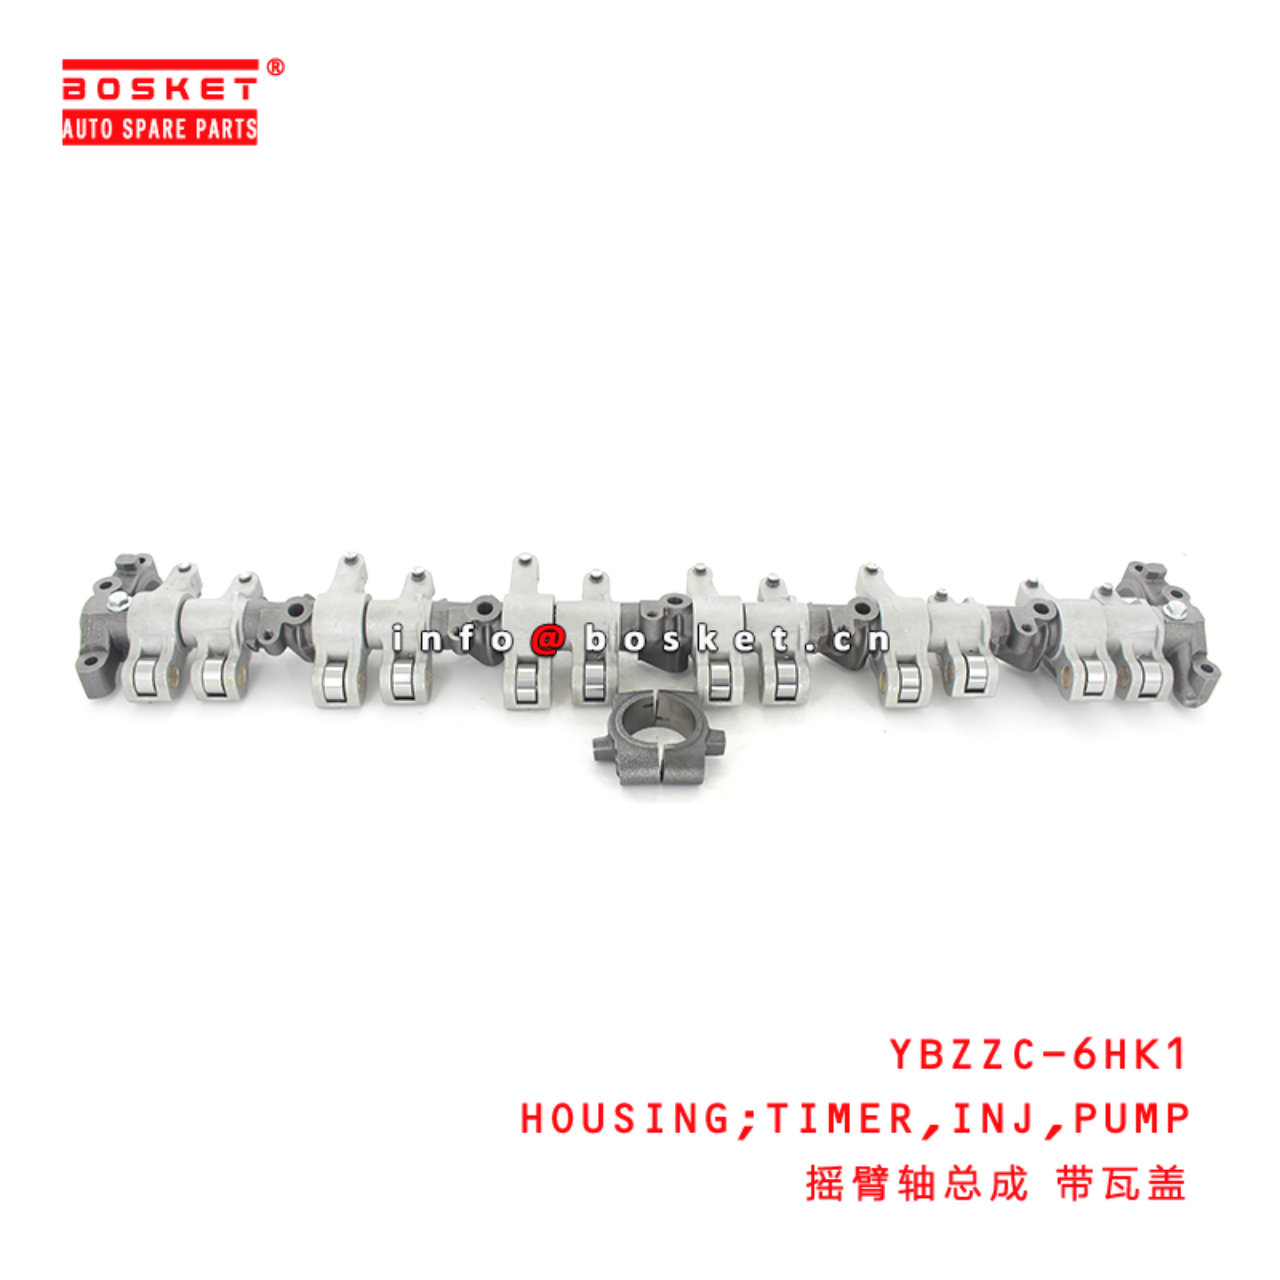 YBZZC-6HK1 Pump Injection Timer Housing Suitable for ISUZU YBZZC-6HK1